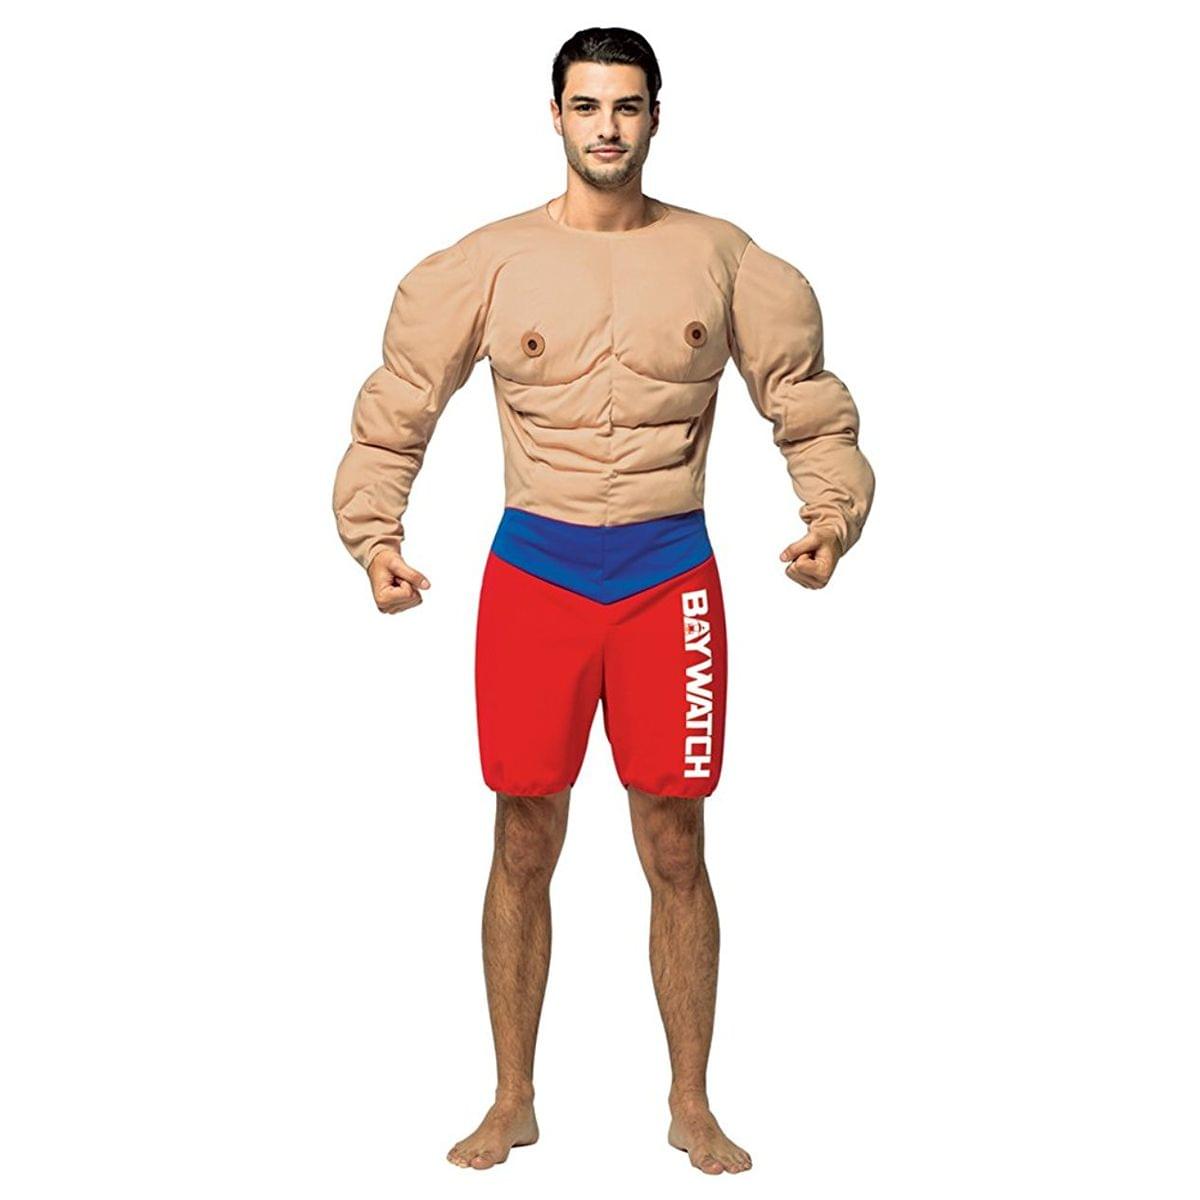 Baywatch Muscle Beach Lifeguard Adult Costume